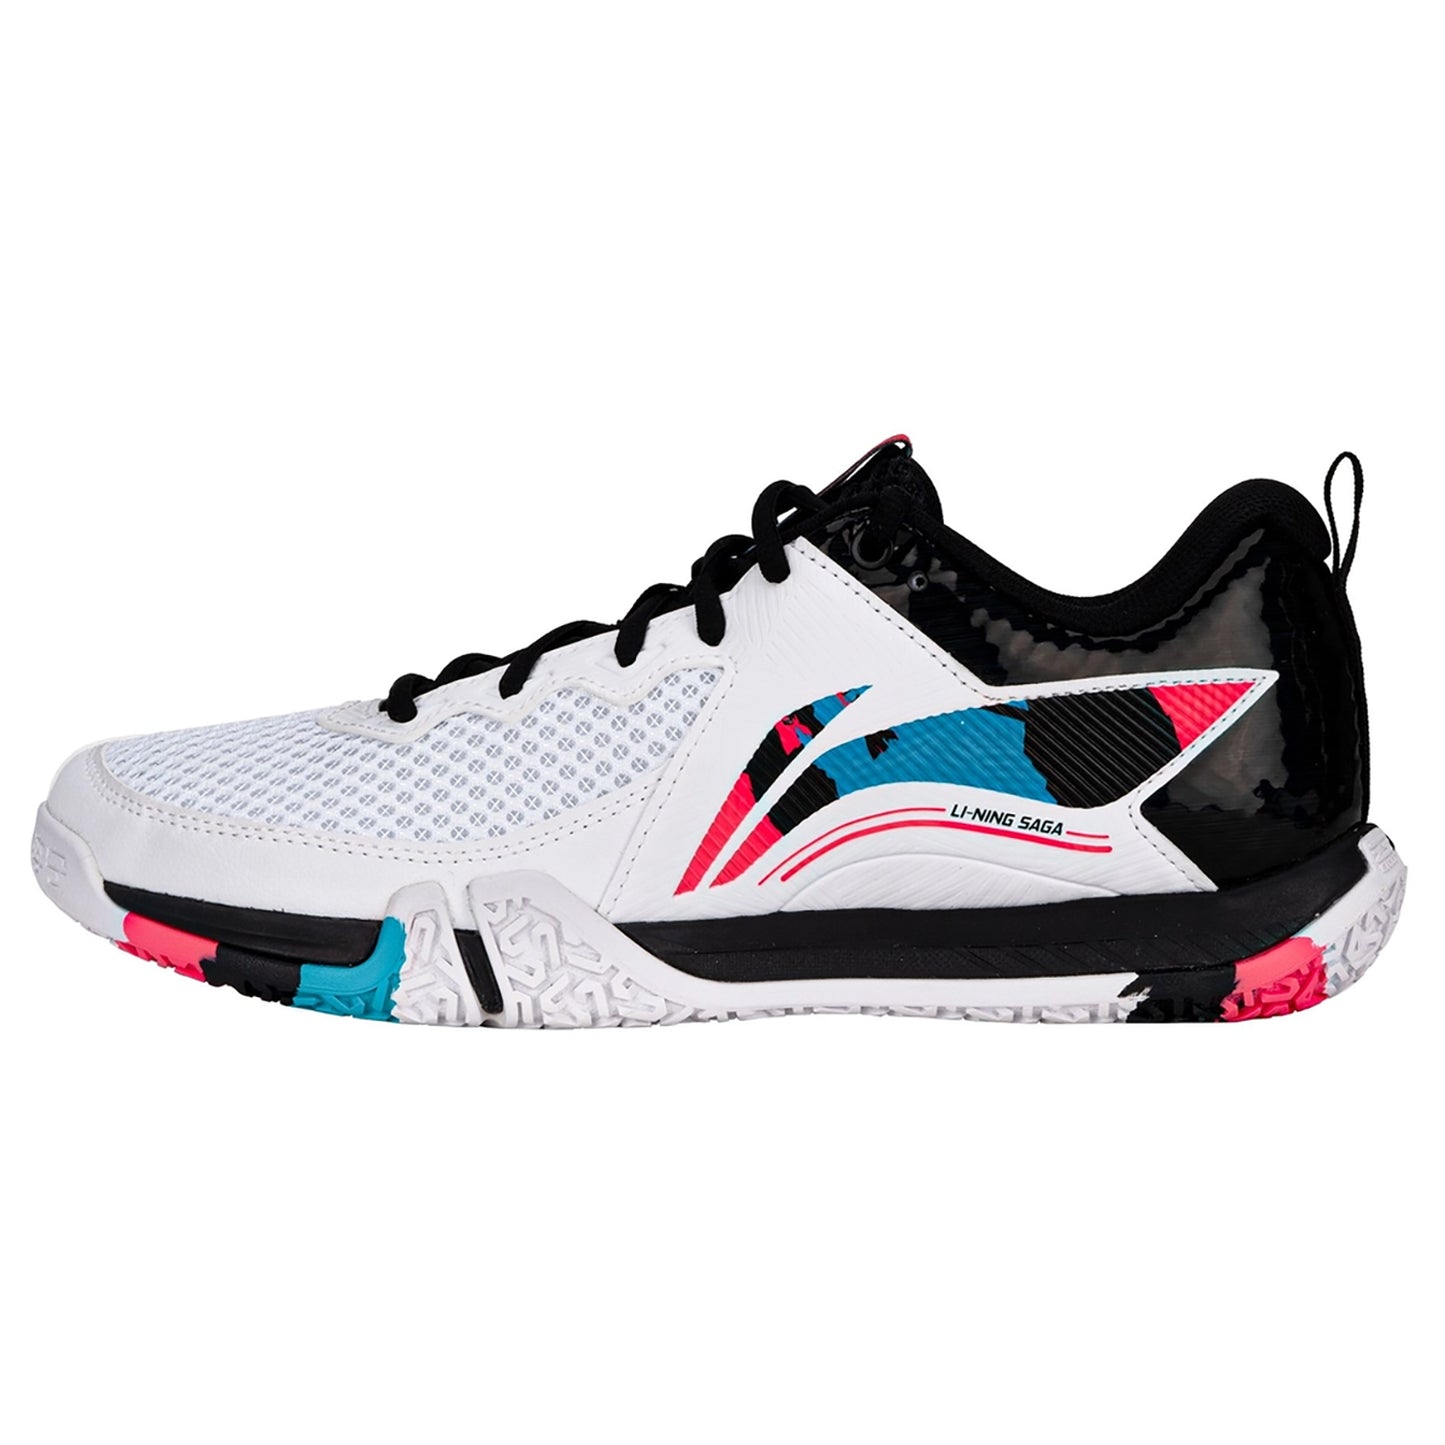 Li-Ning Saga II Lite Badminton Training Shoes - Best Price online Prokicksports.com